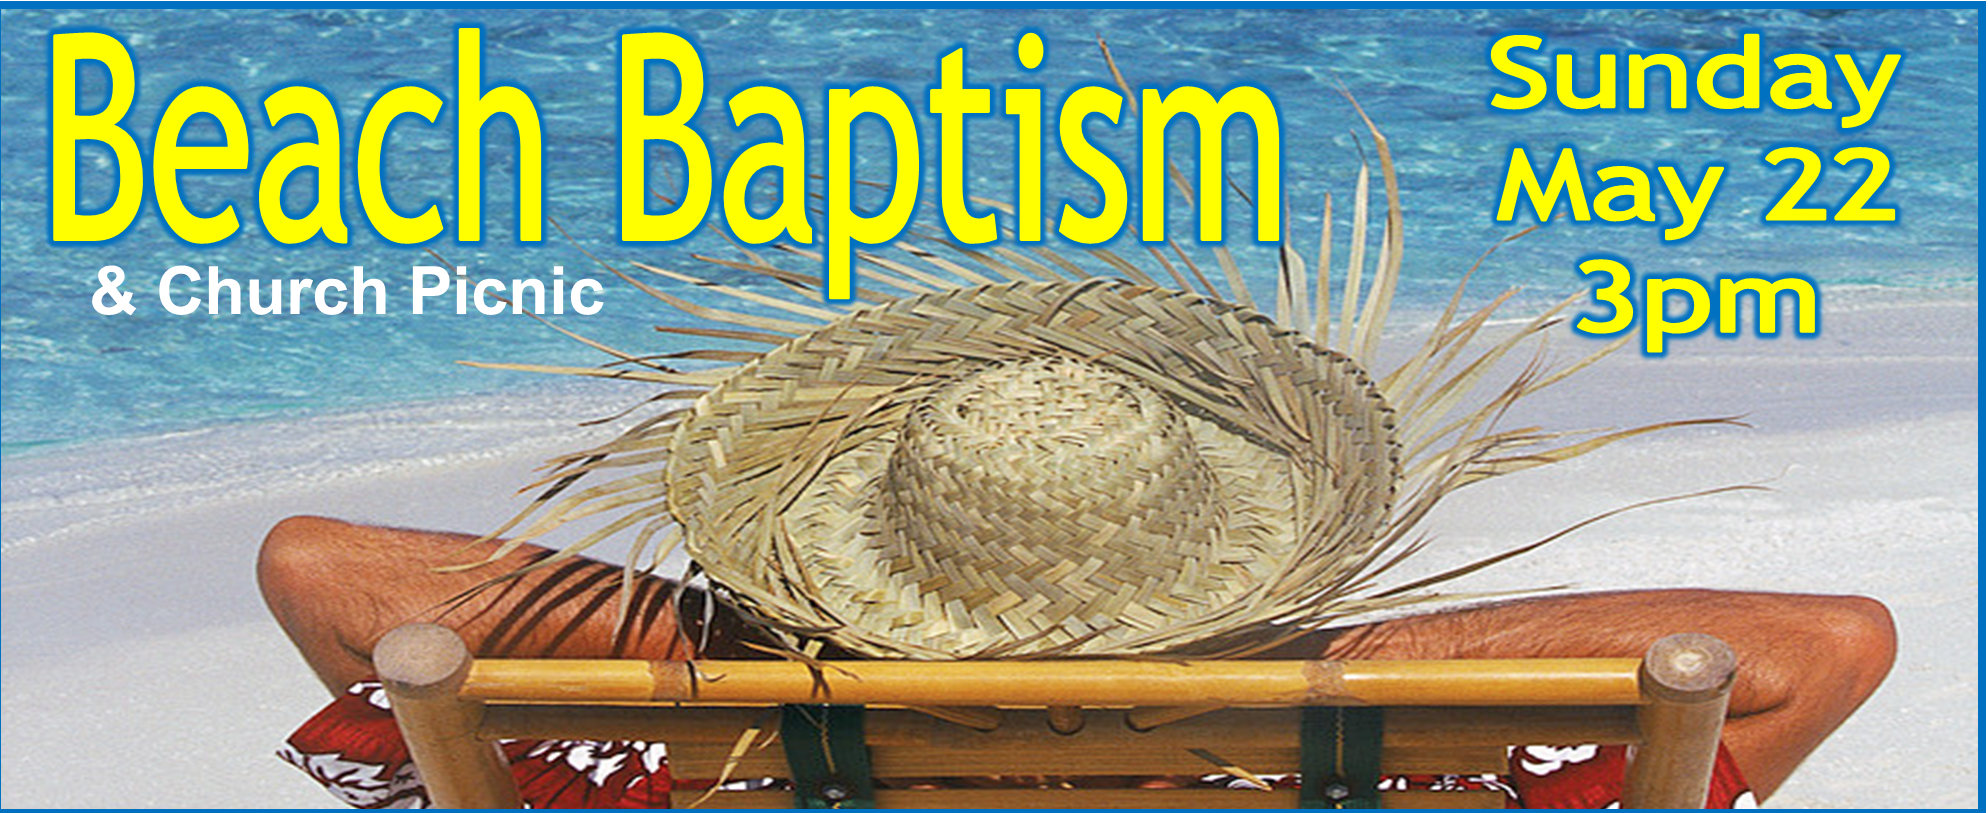 Beach Baptism 5-22-22  Web Banner